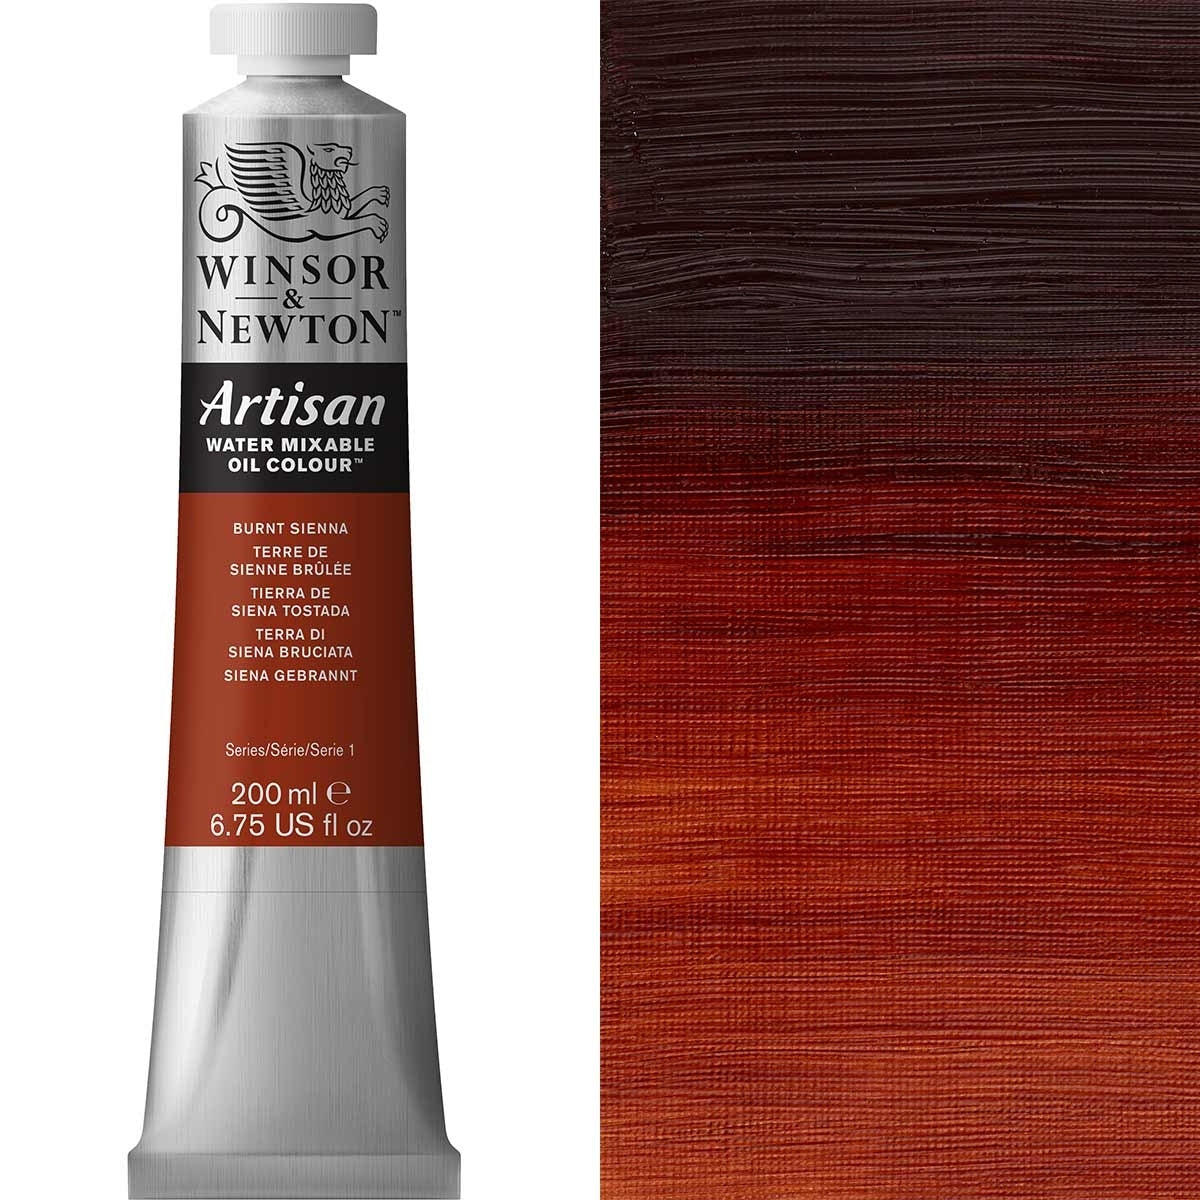 Winsor and Newton - Artisan Oil Colour Watermixable - 200ml - Burnt Sienna